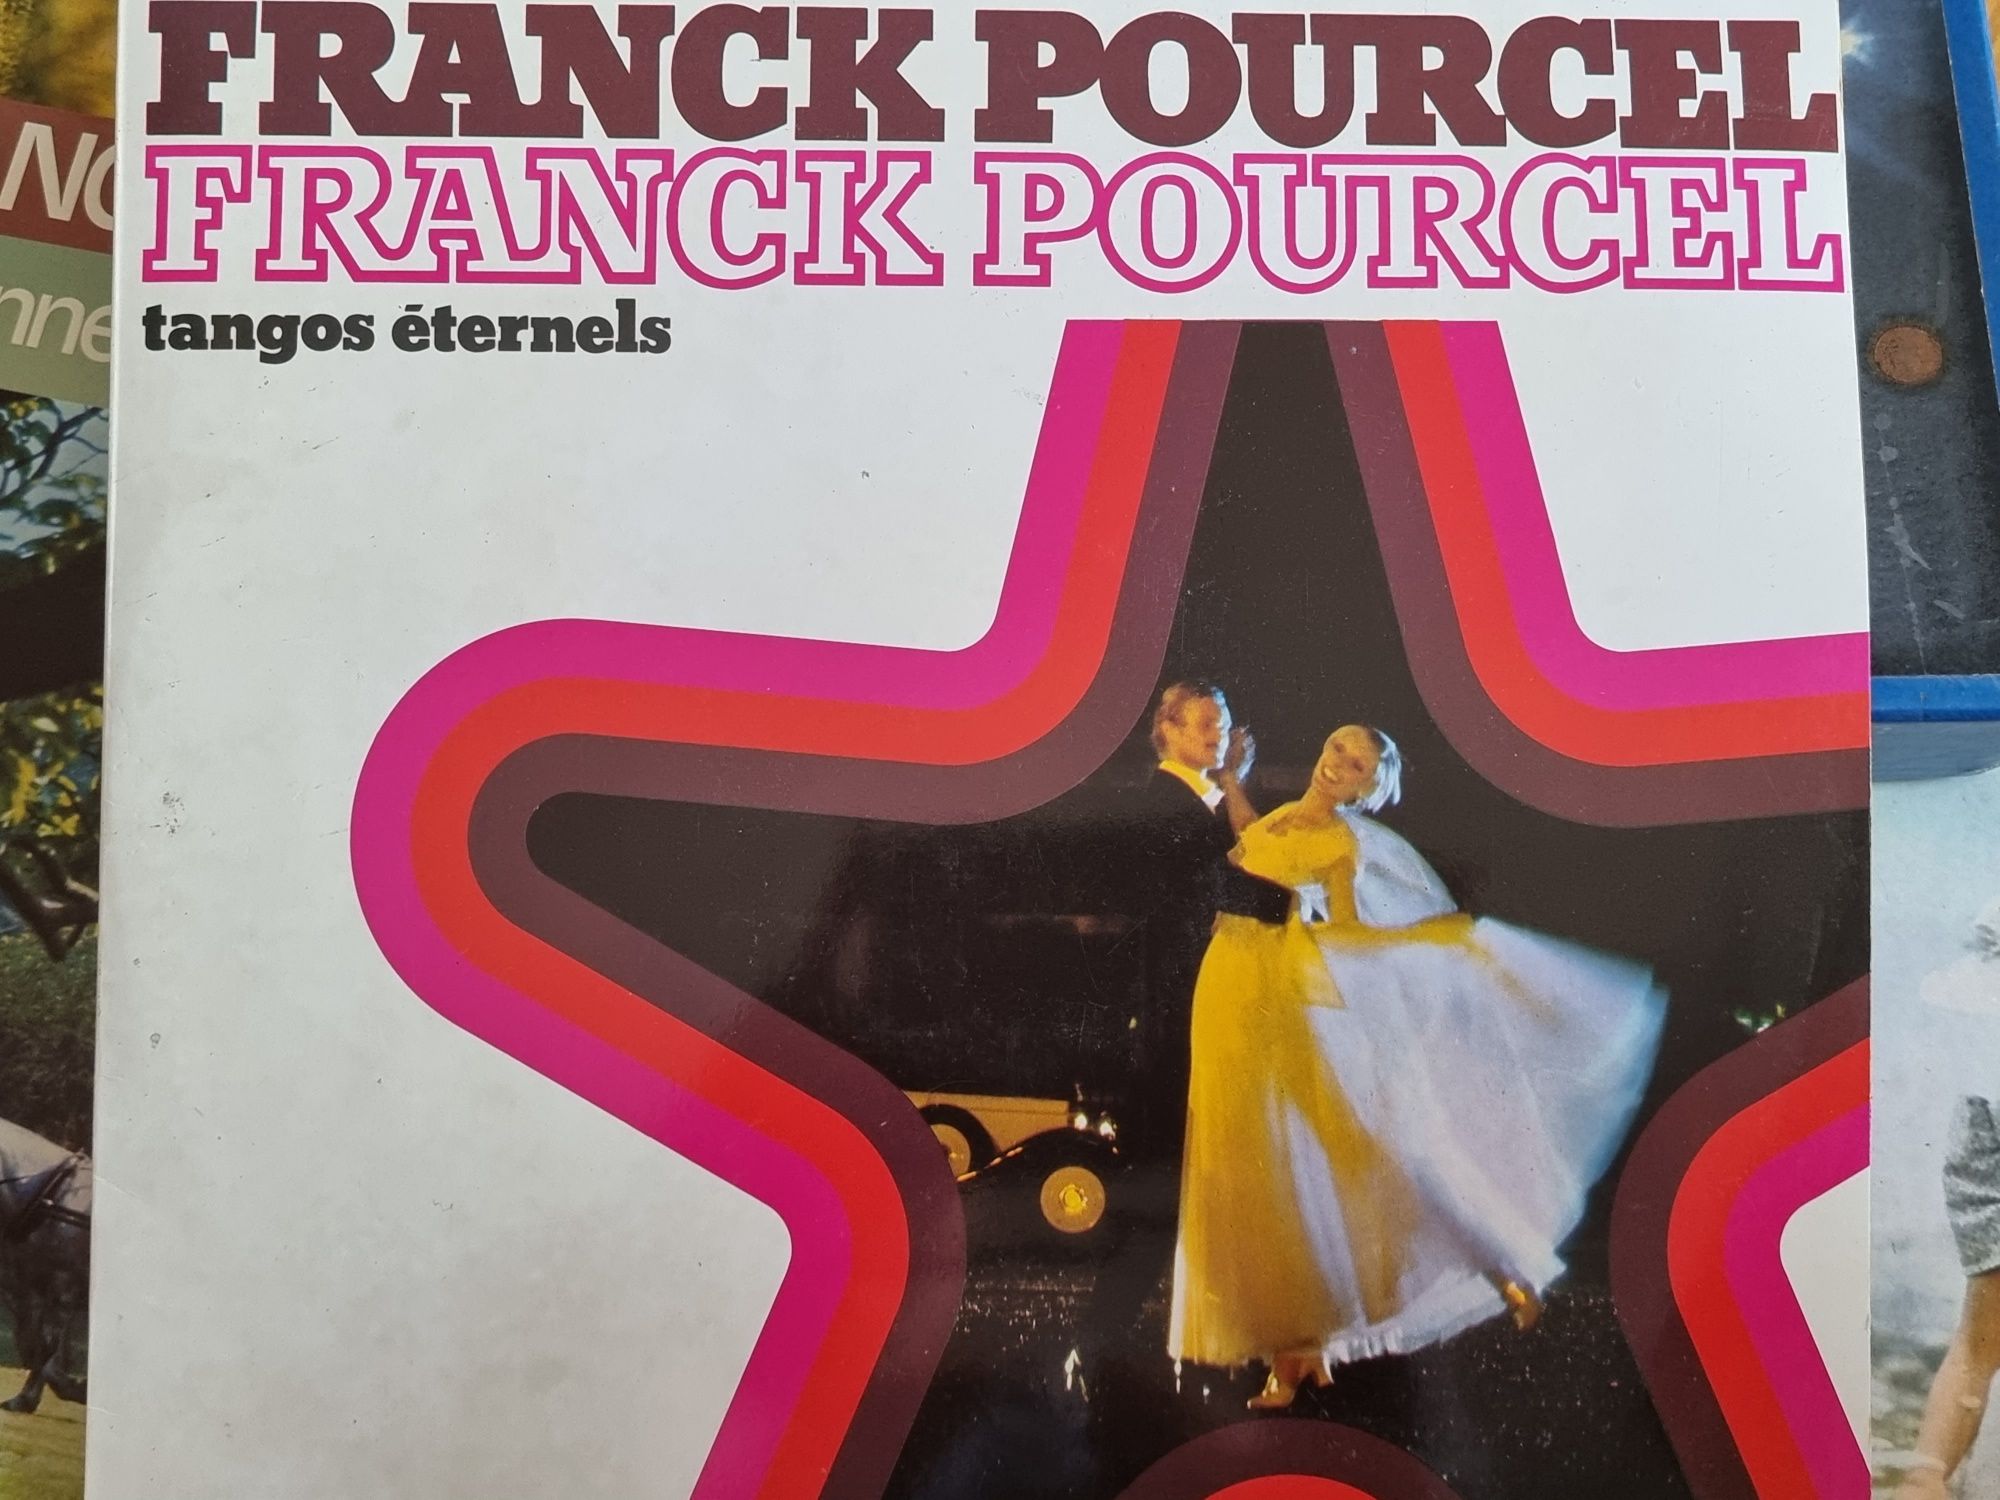 Colecção de discos vinil Franck Pourcel